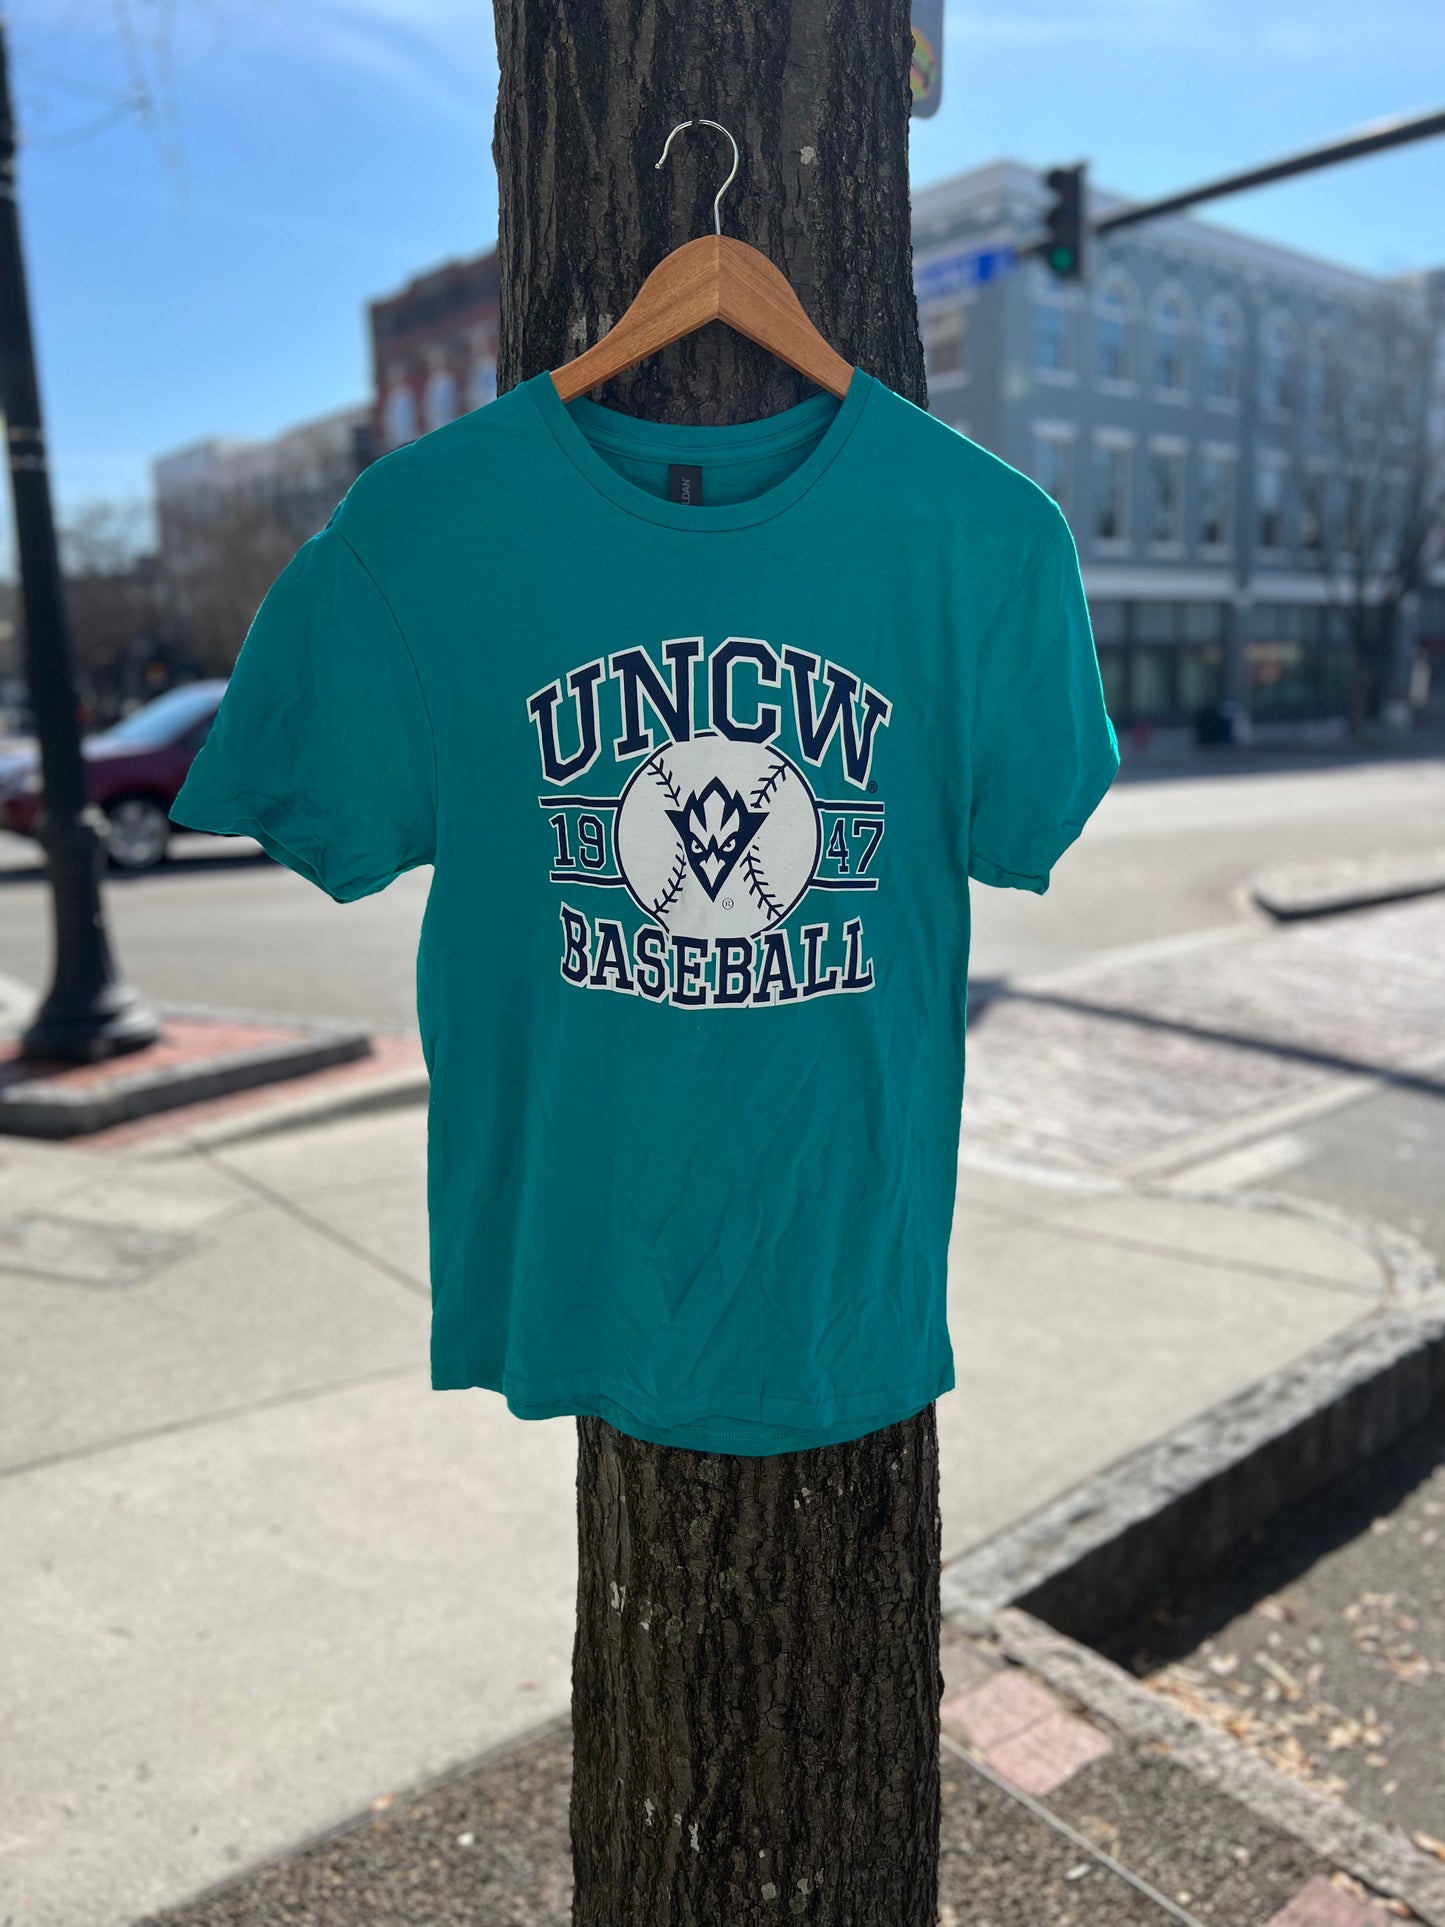 UNCW Baseball  - T Shirt - Teal